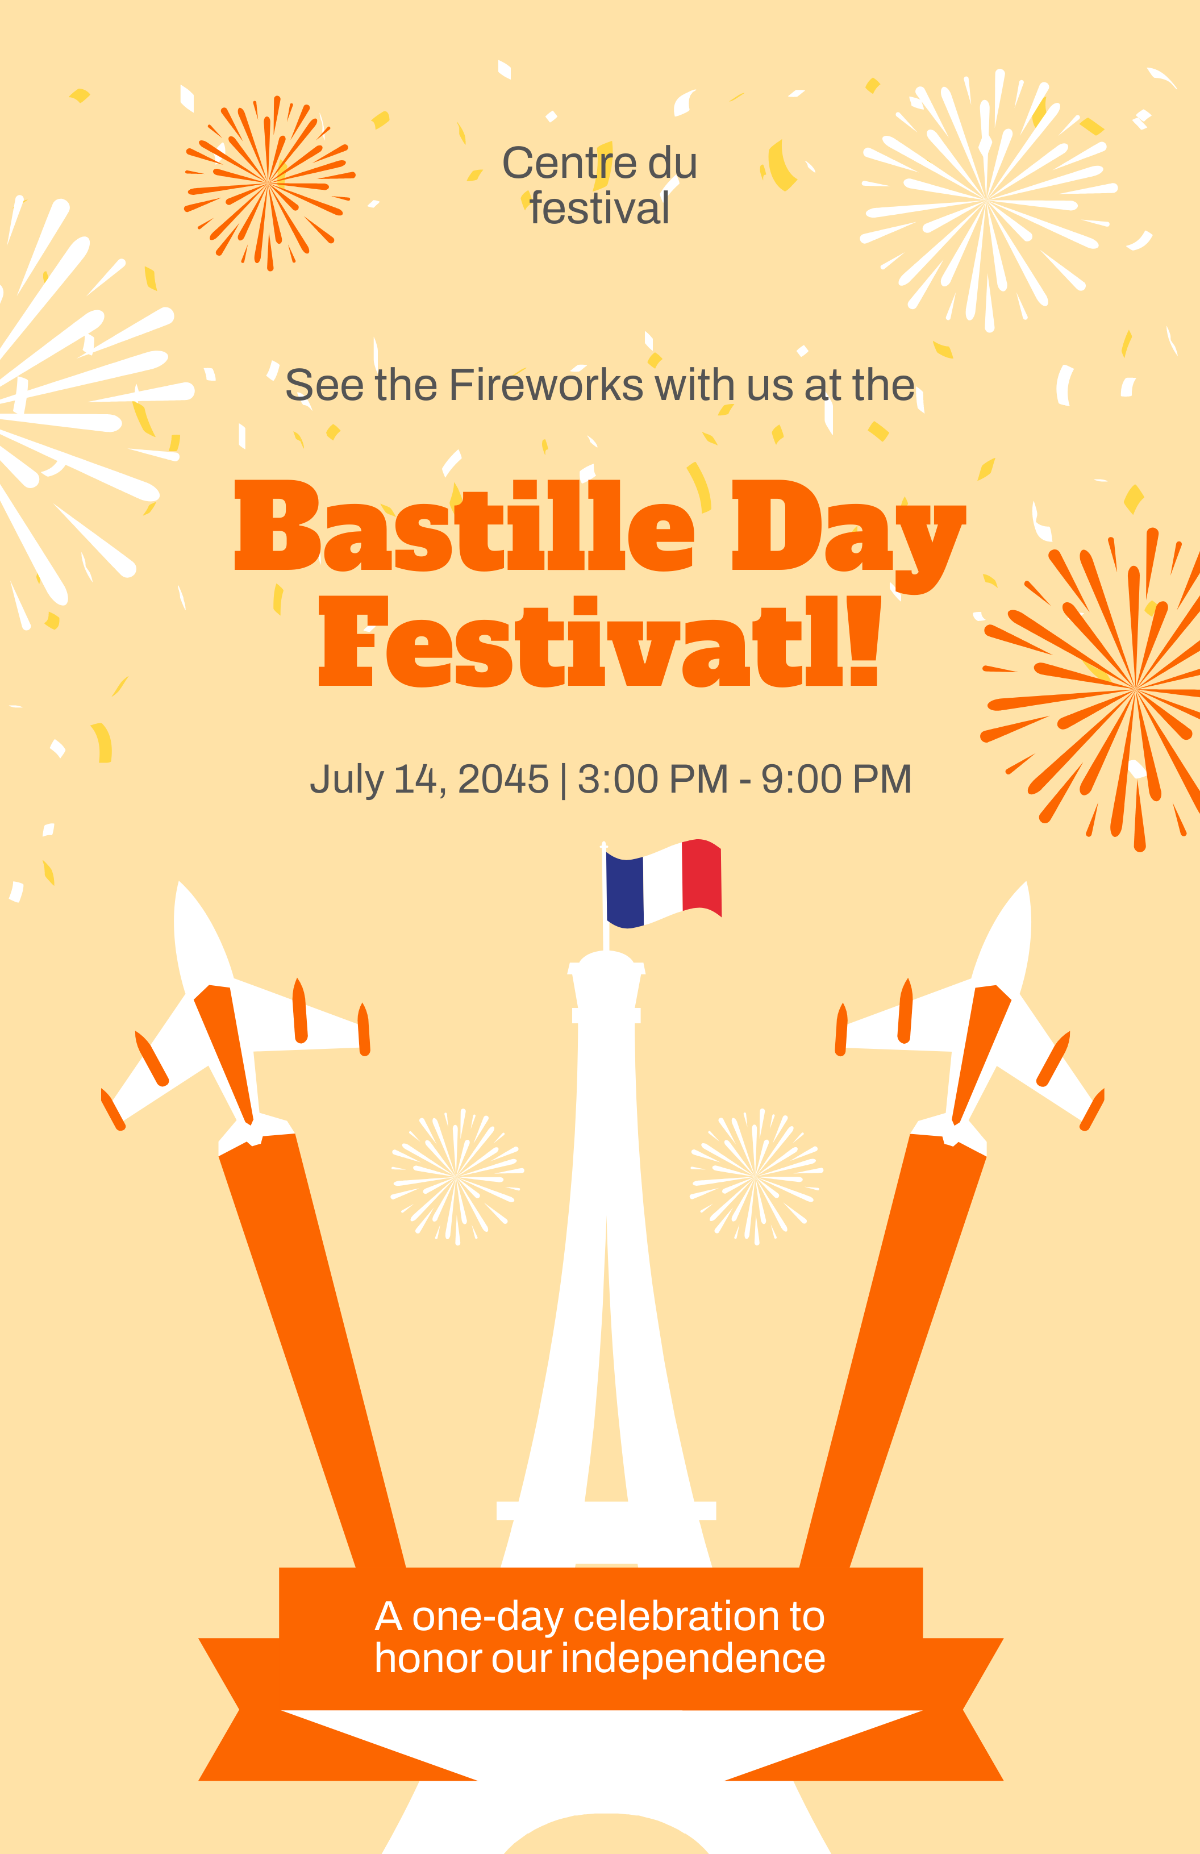 Free Bastille Day Festival Poster Template